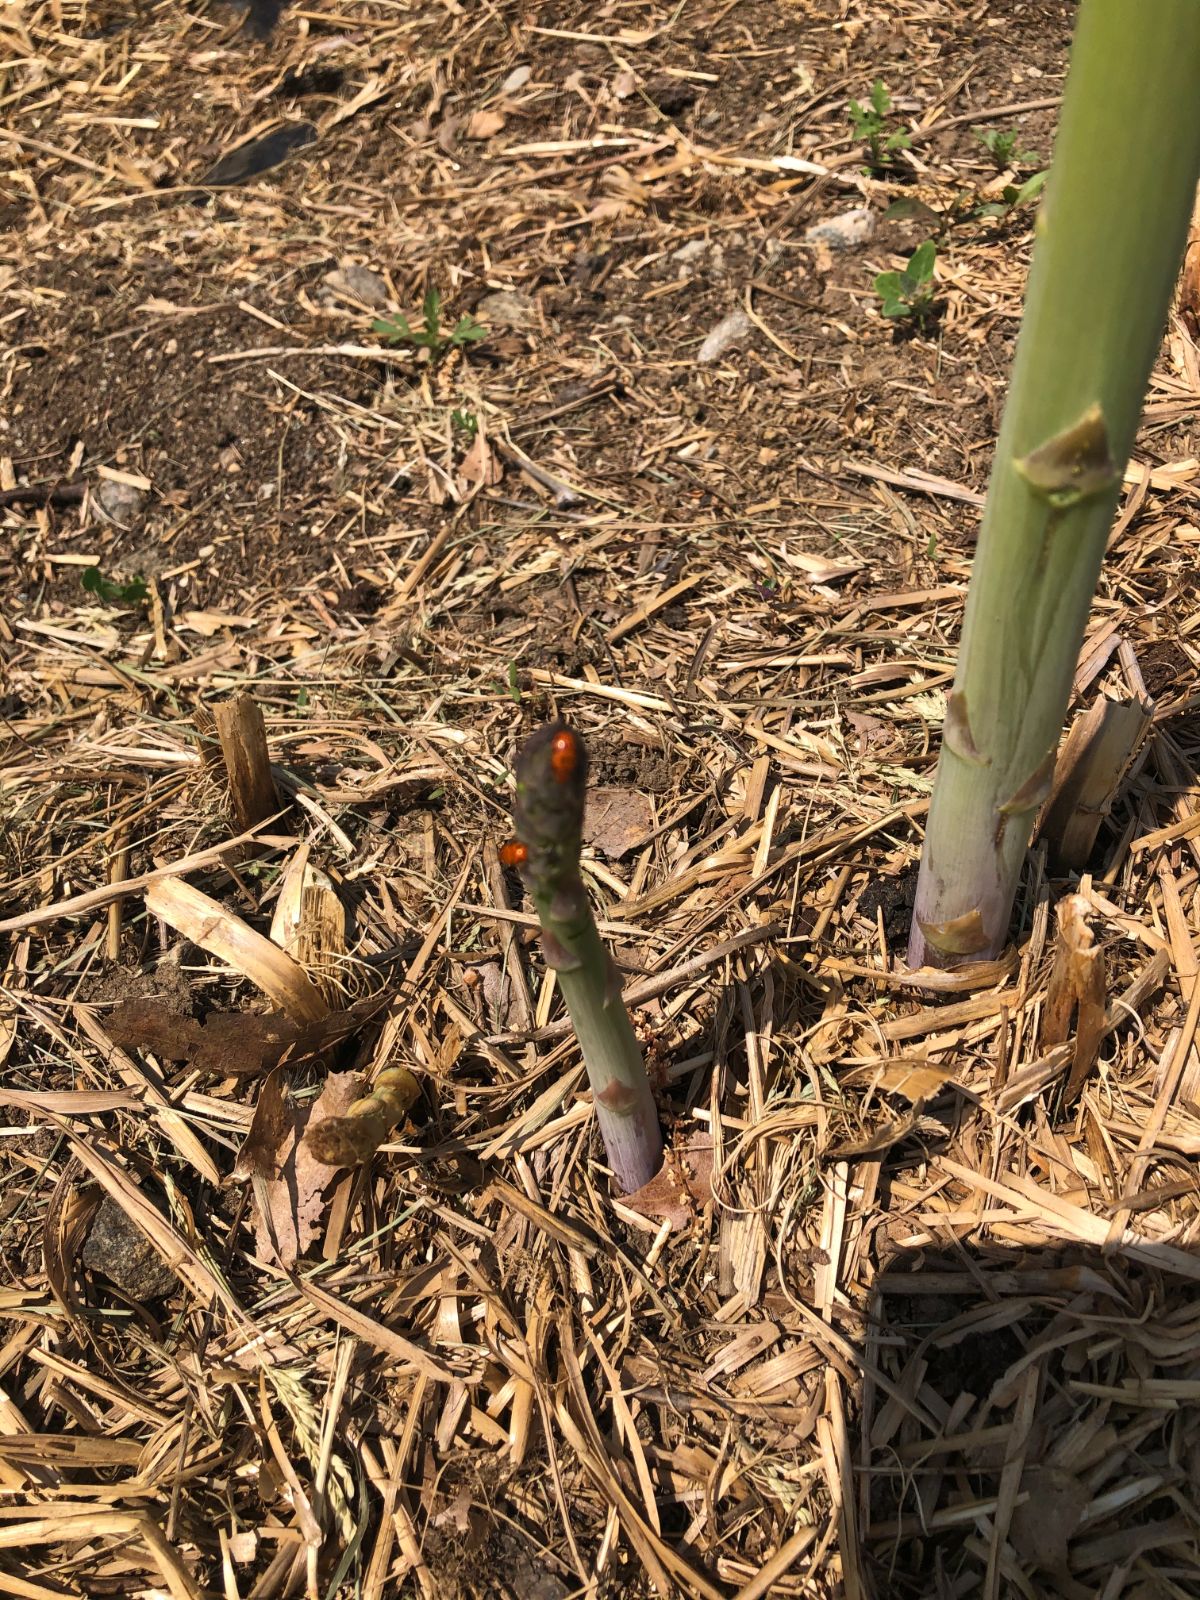 An asparagus plant with asparagus beetles hiding in mulch